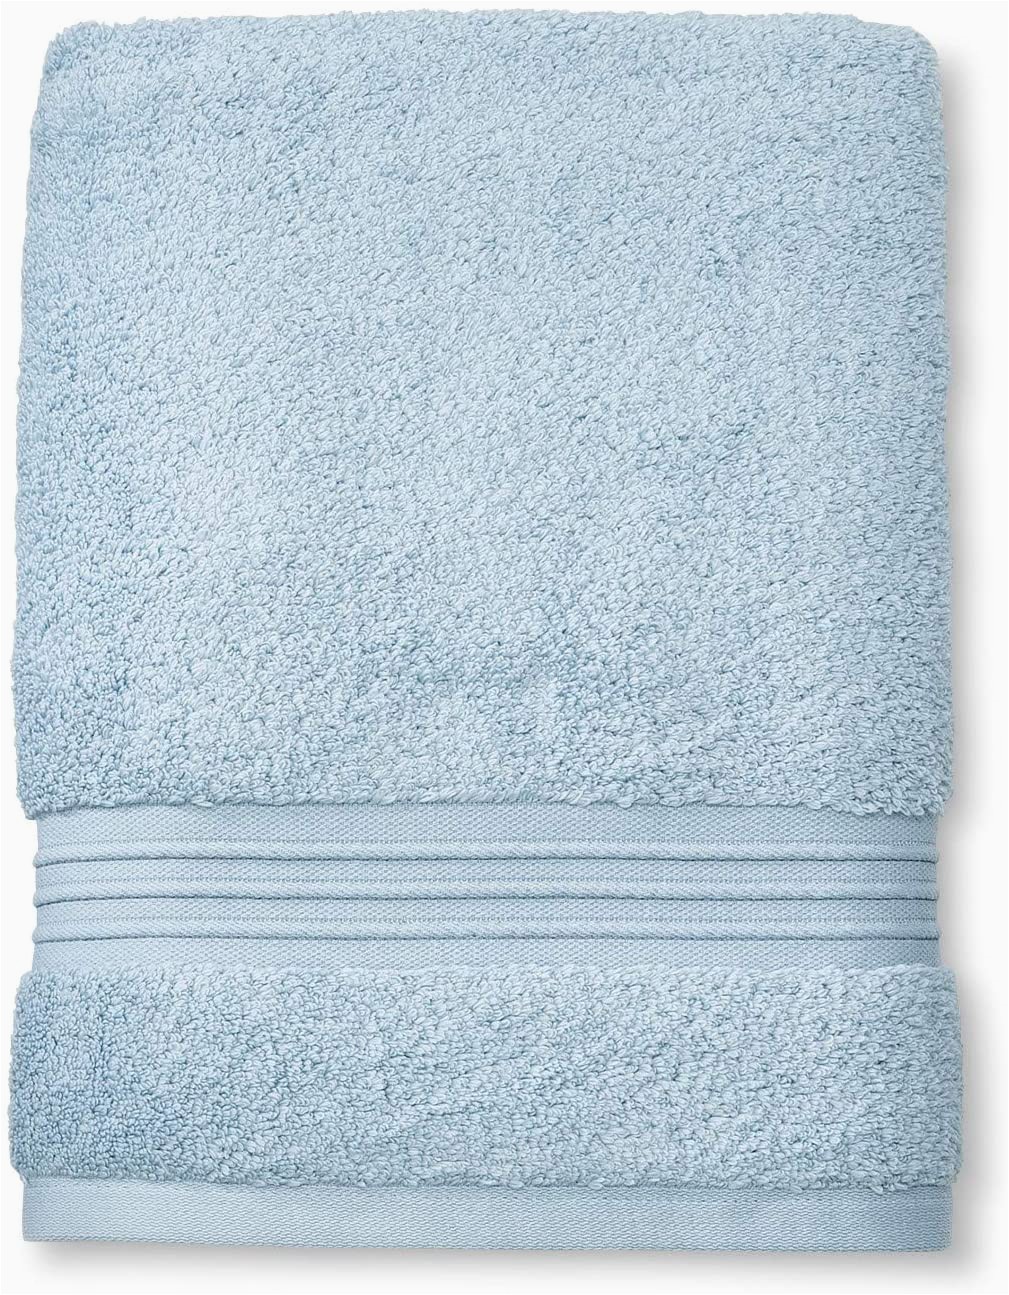 Fieldcrest Spa Collection Bath Rugs Fieldcrest Spa Collection Glowing Blue Bath towel